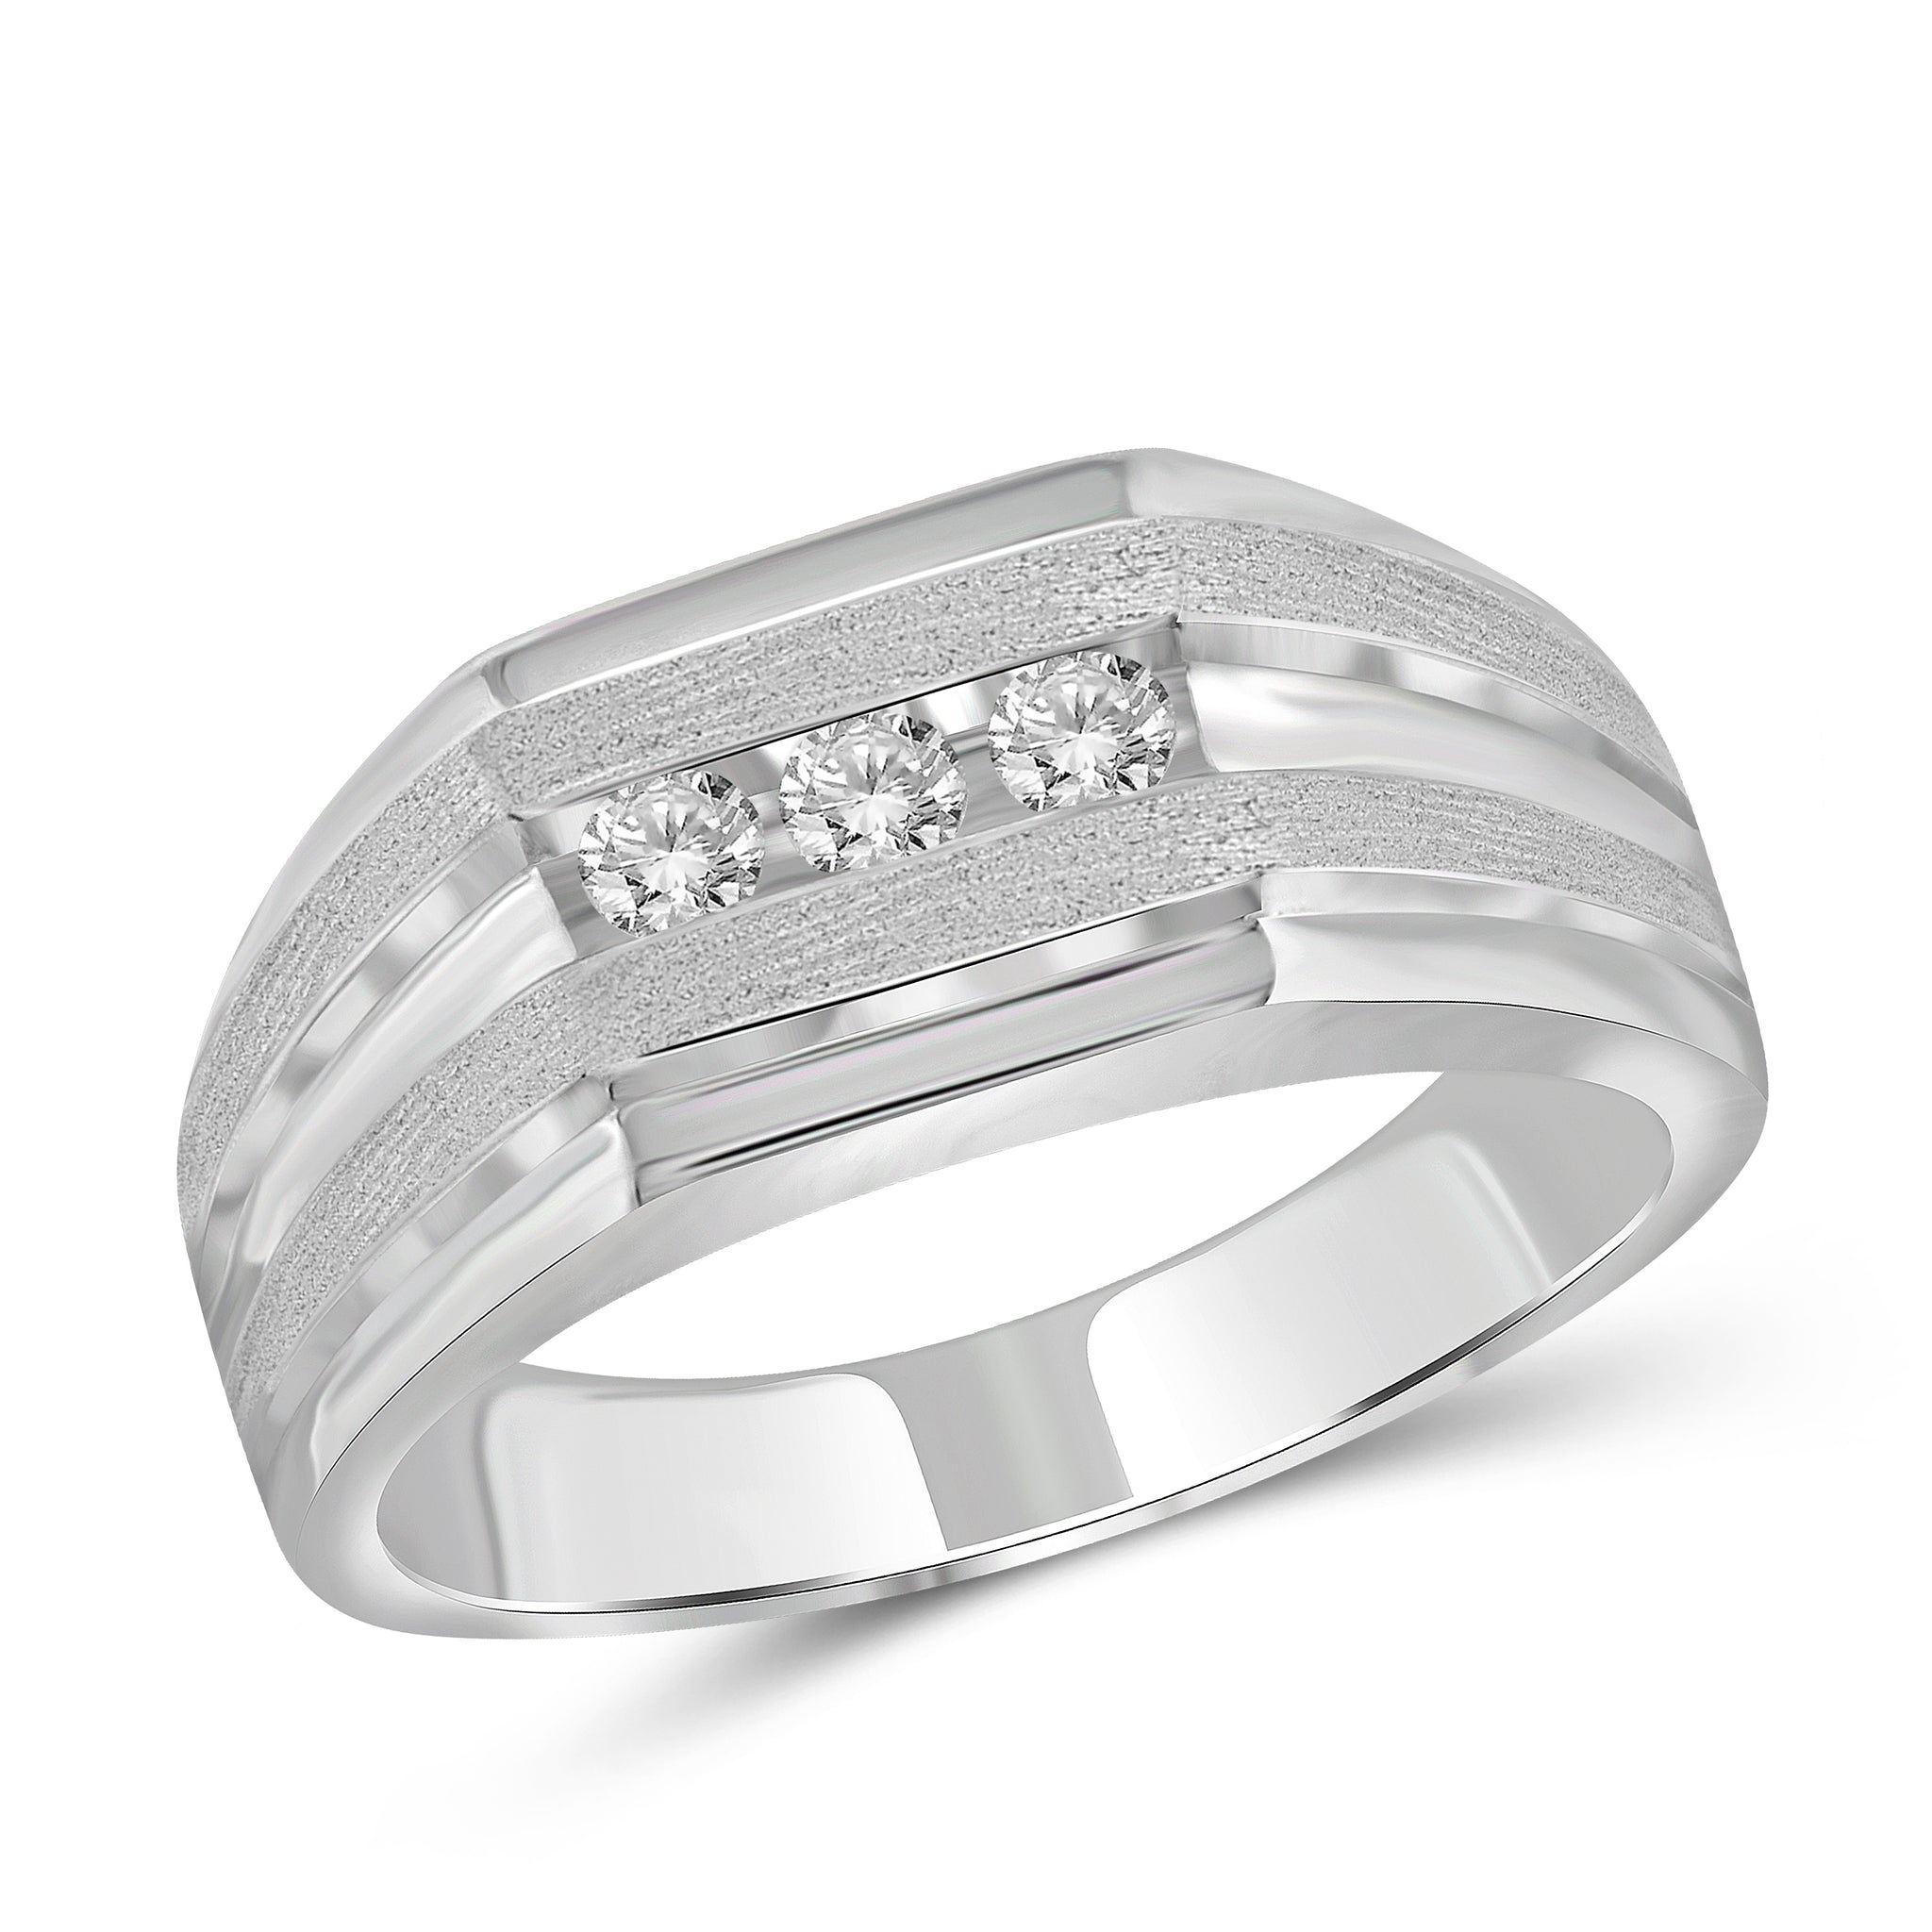 Jewelnova 1/4 Carat T.W. White Diamond 10k Gold Three Stone Men's Ring - Assorted Colors